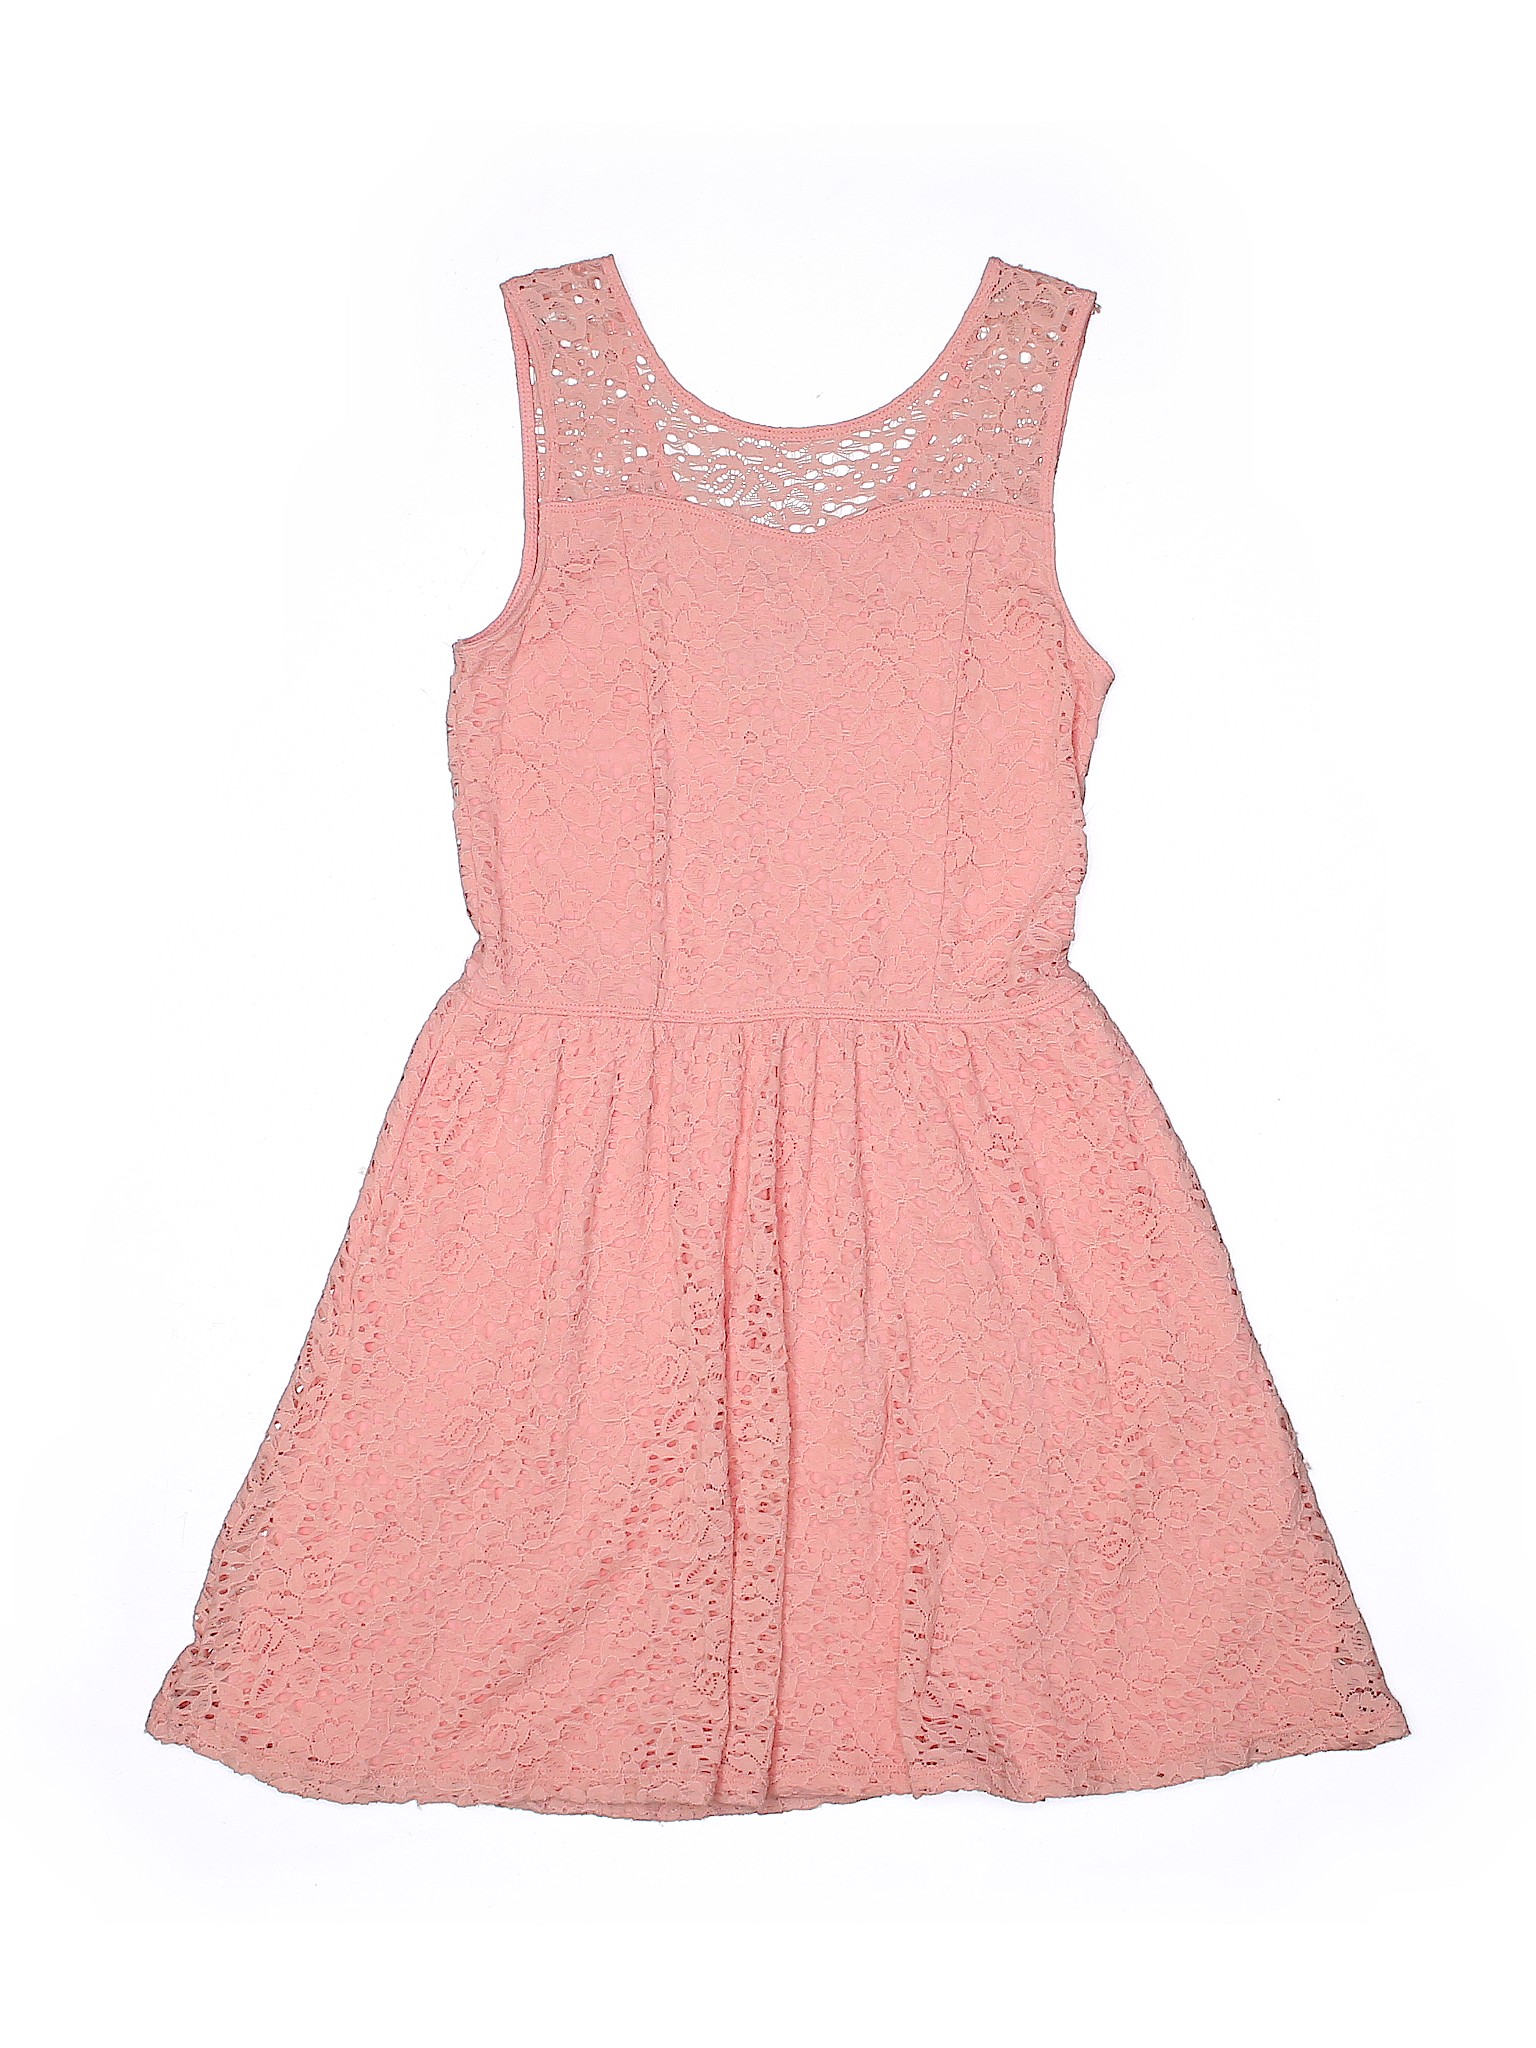 Abercrombie Pink Dress Size 11 - 12 - 76% off | thredUP